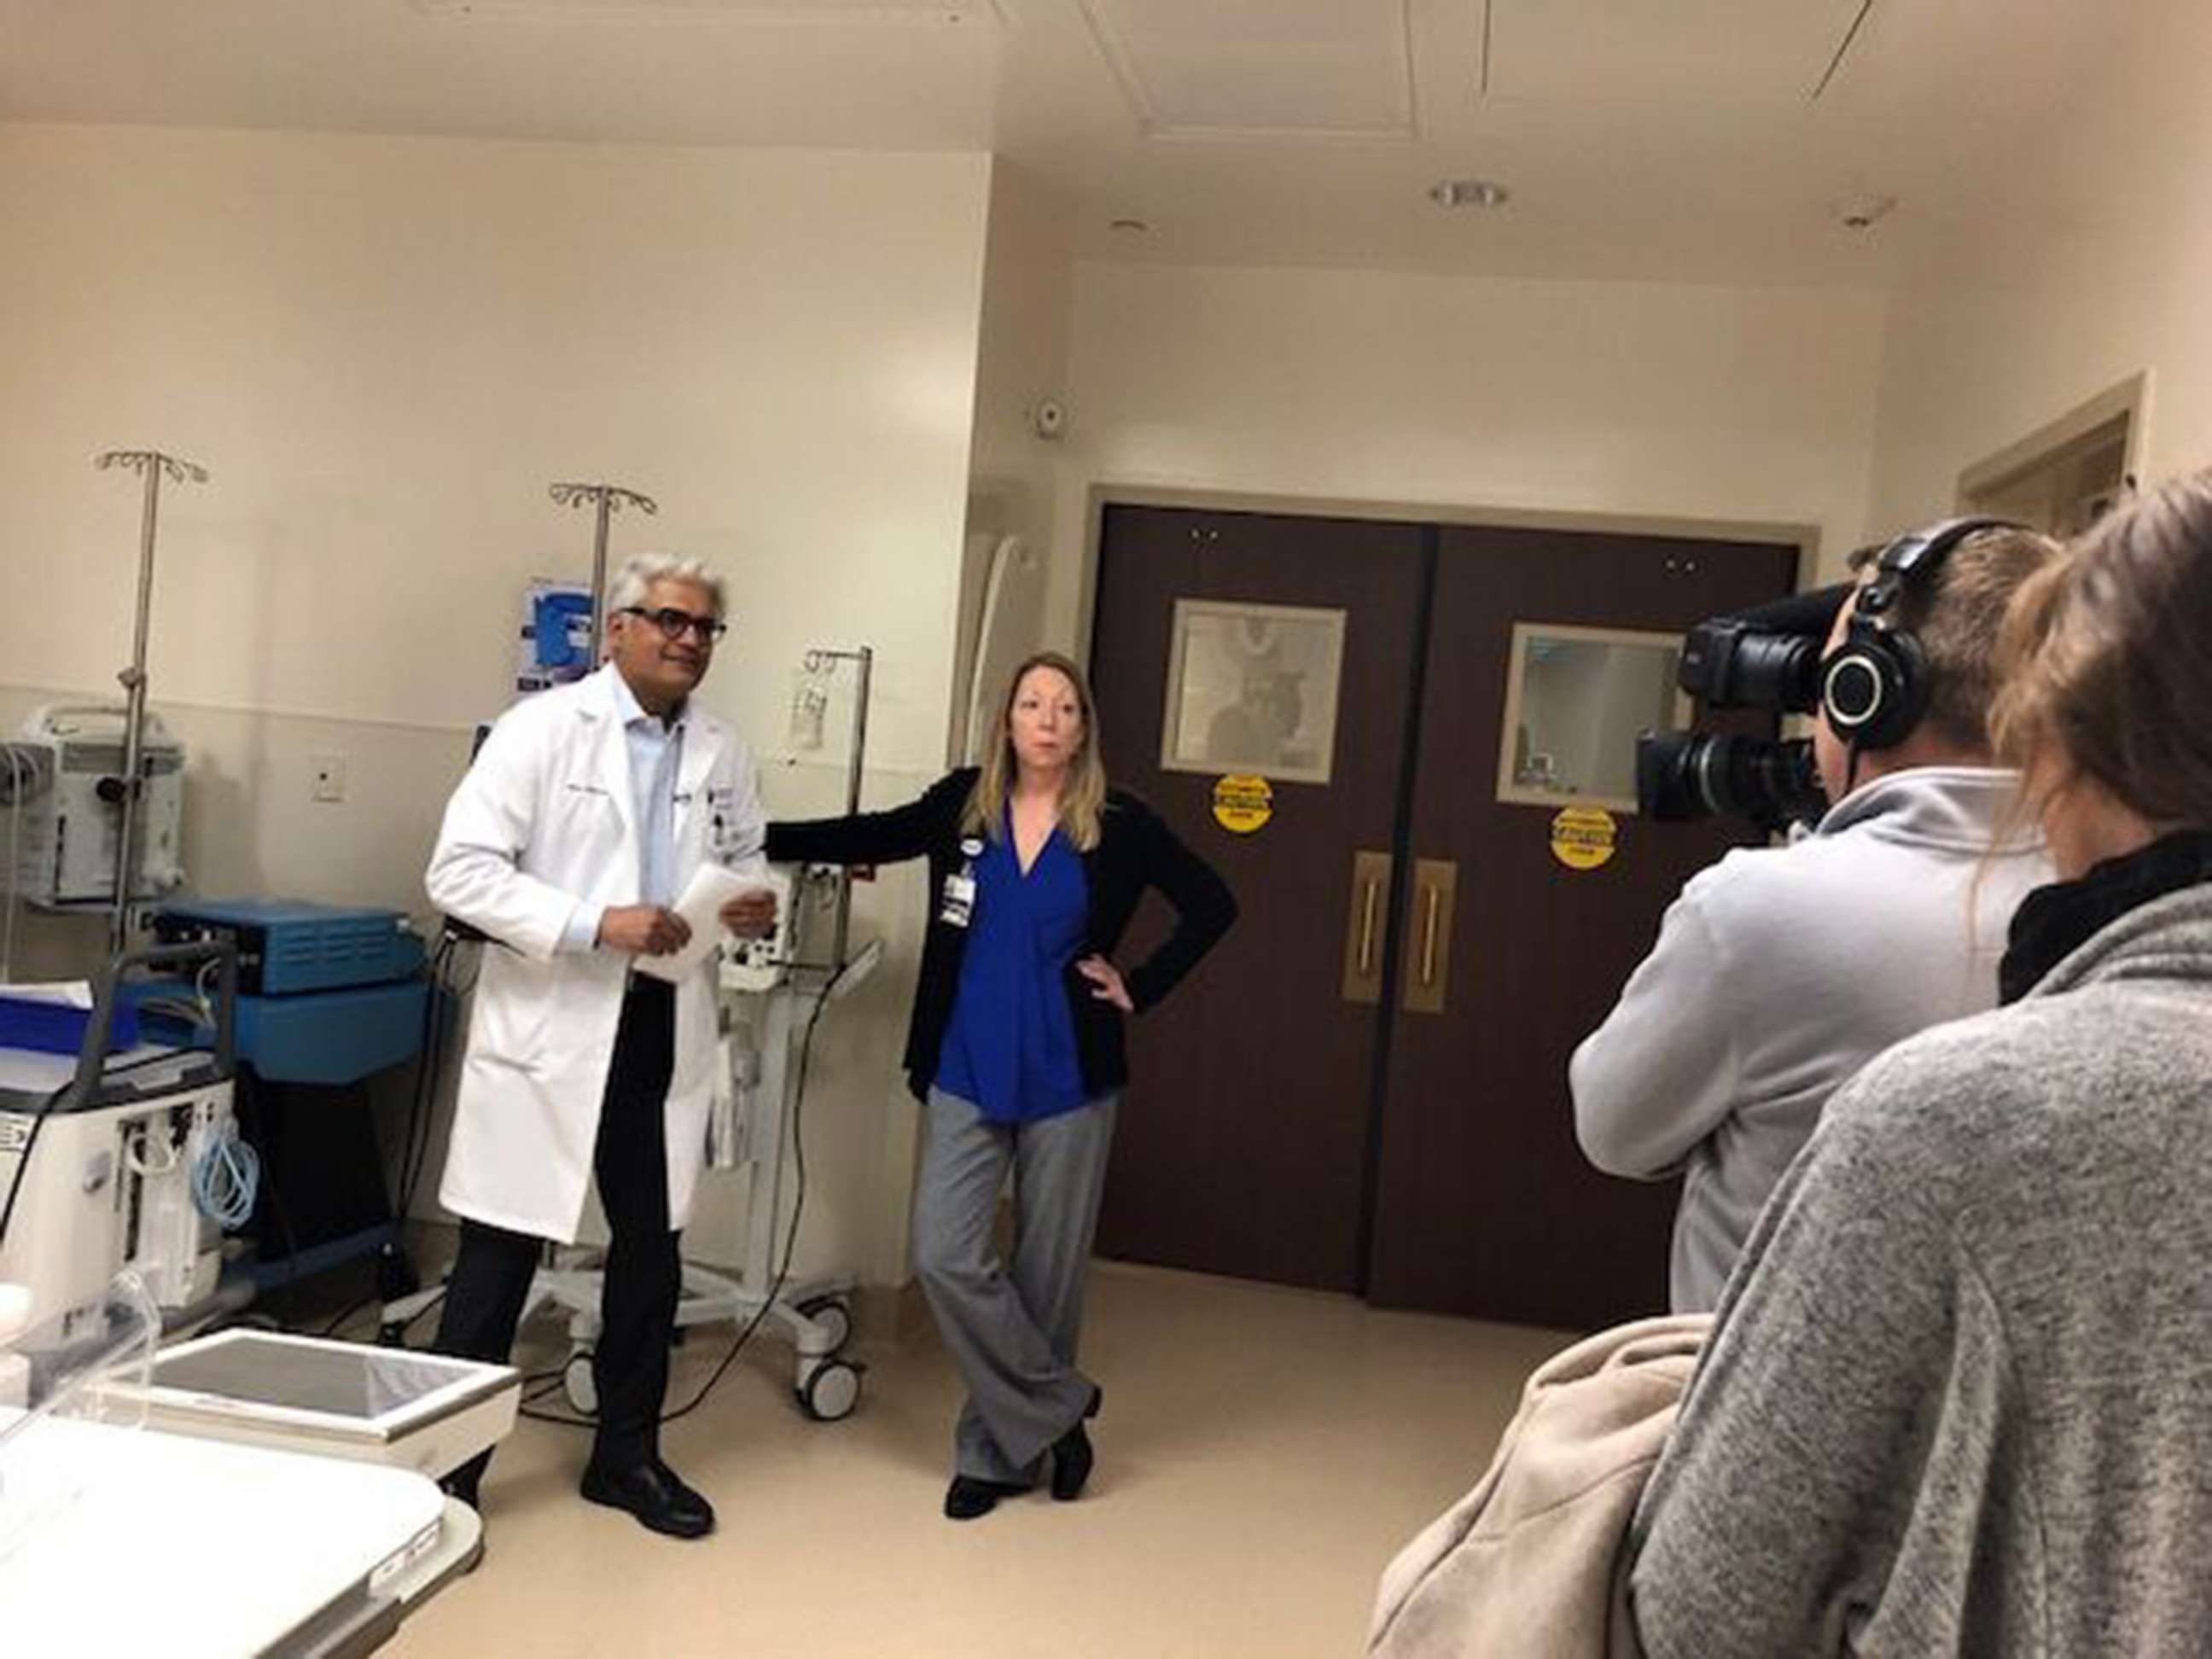 PHOTO: Jennifer Gaydosh poses with her cardiologist, Dr. Vijay Subbarao, at Rose Medical Center in Denver.